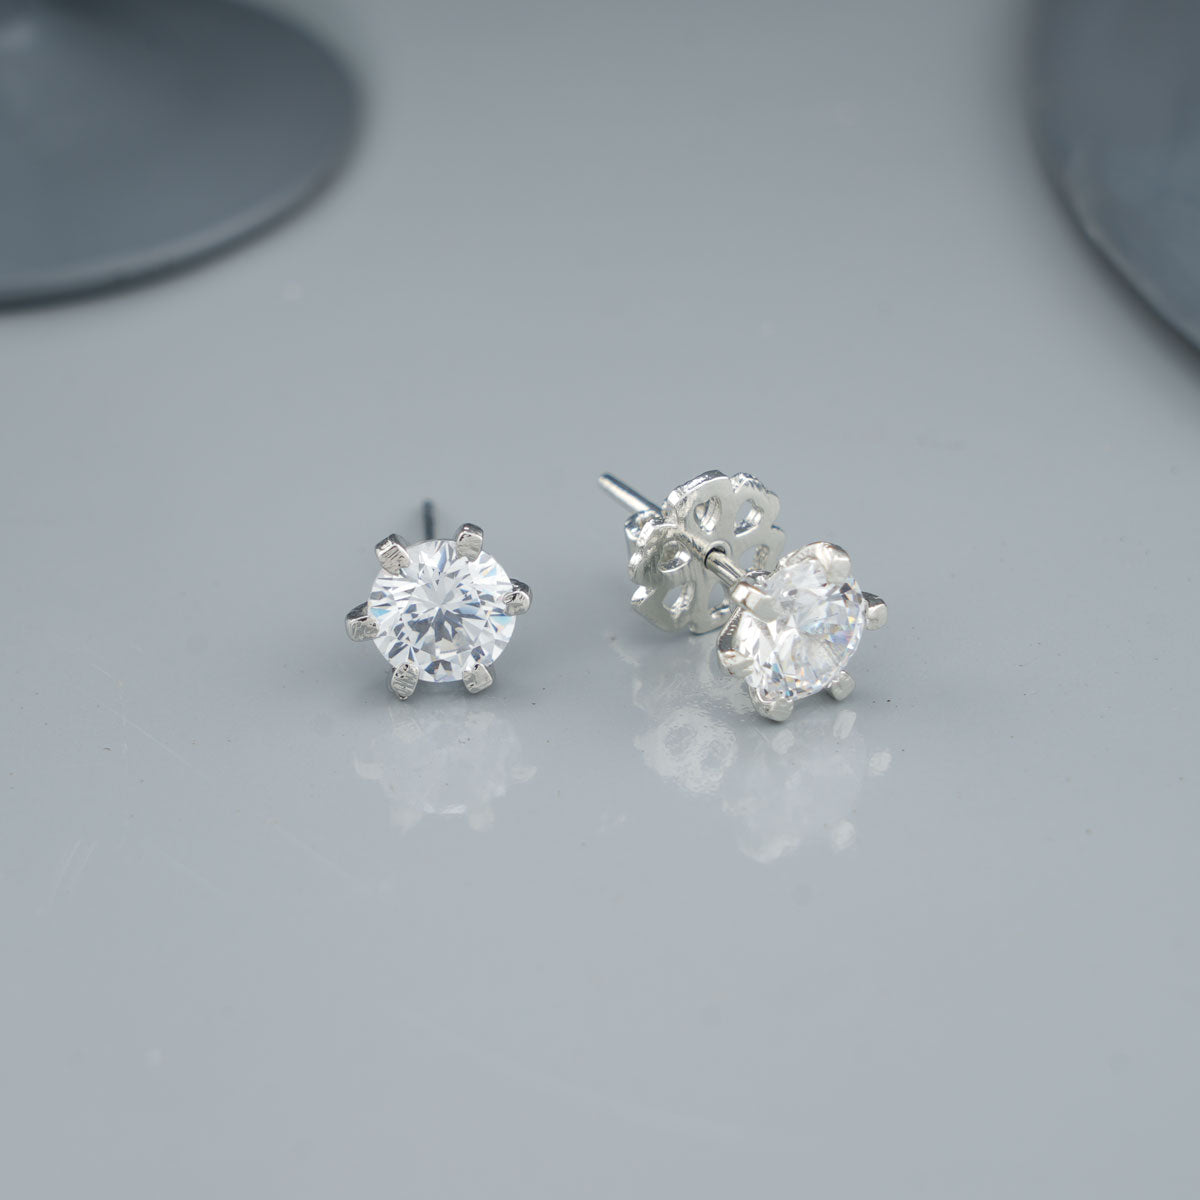 Preowned 18 carat white gold single stone diamond stud earrings - Aylesbury  Bullion